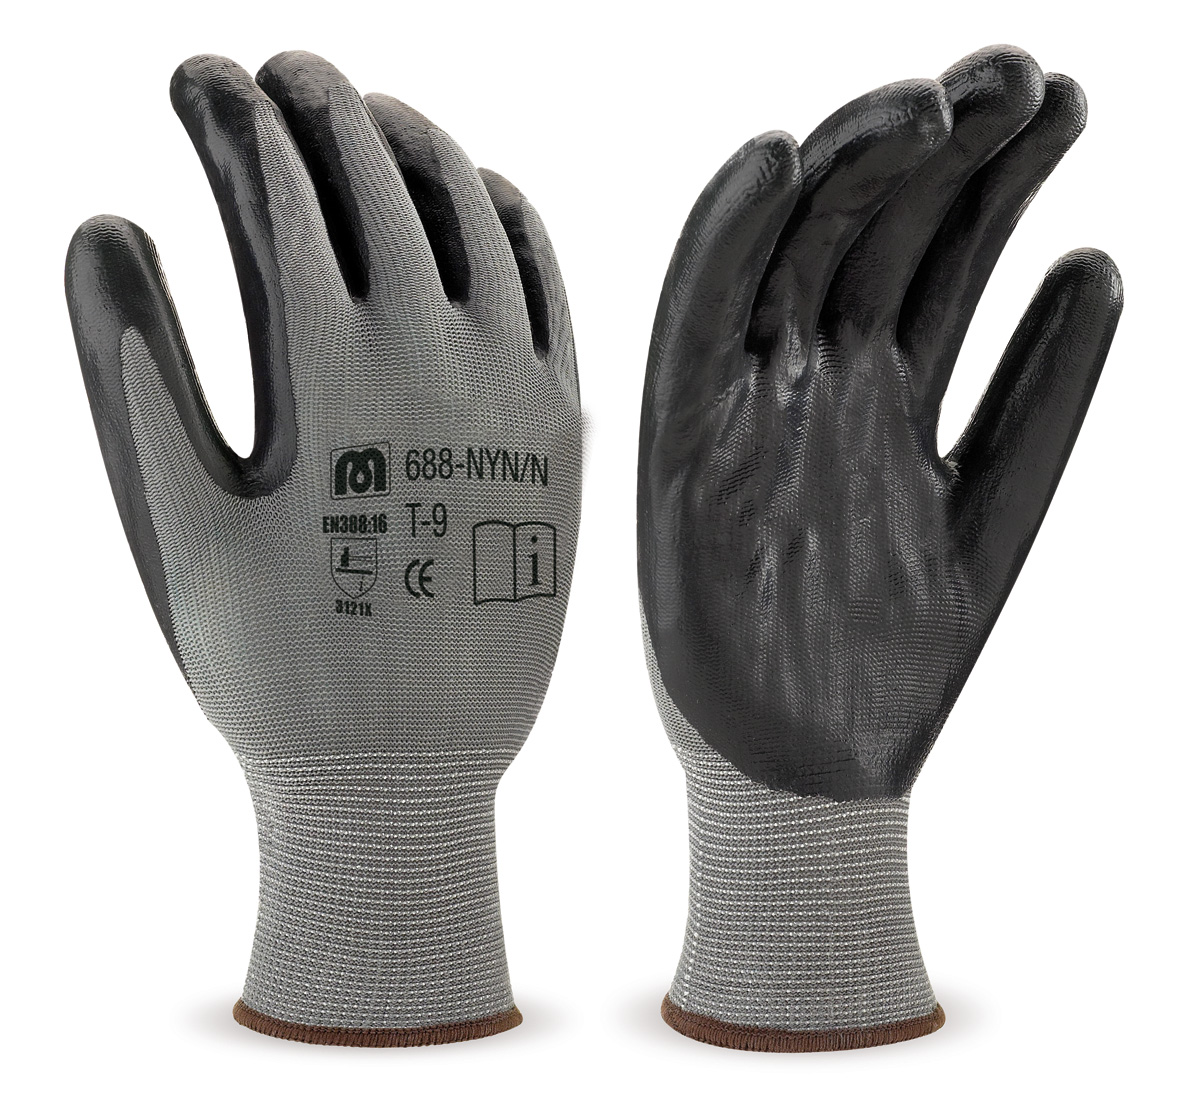 688-NYN/N Work Gloves Nylon Black polyester glove with black nitrile coating.